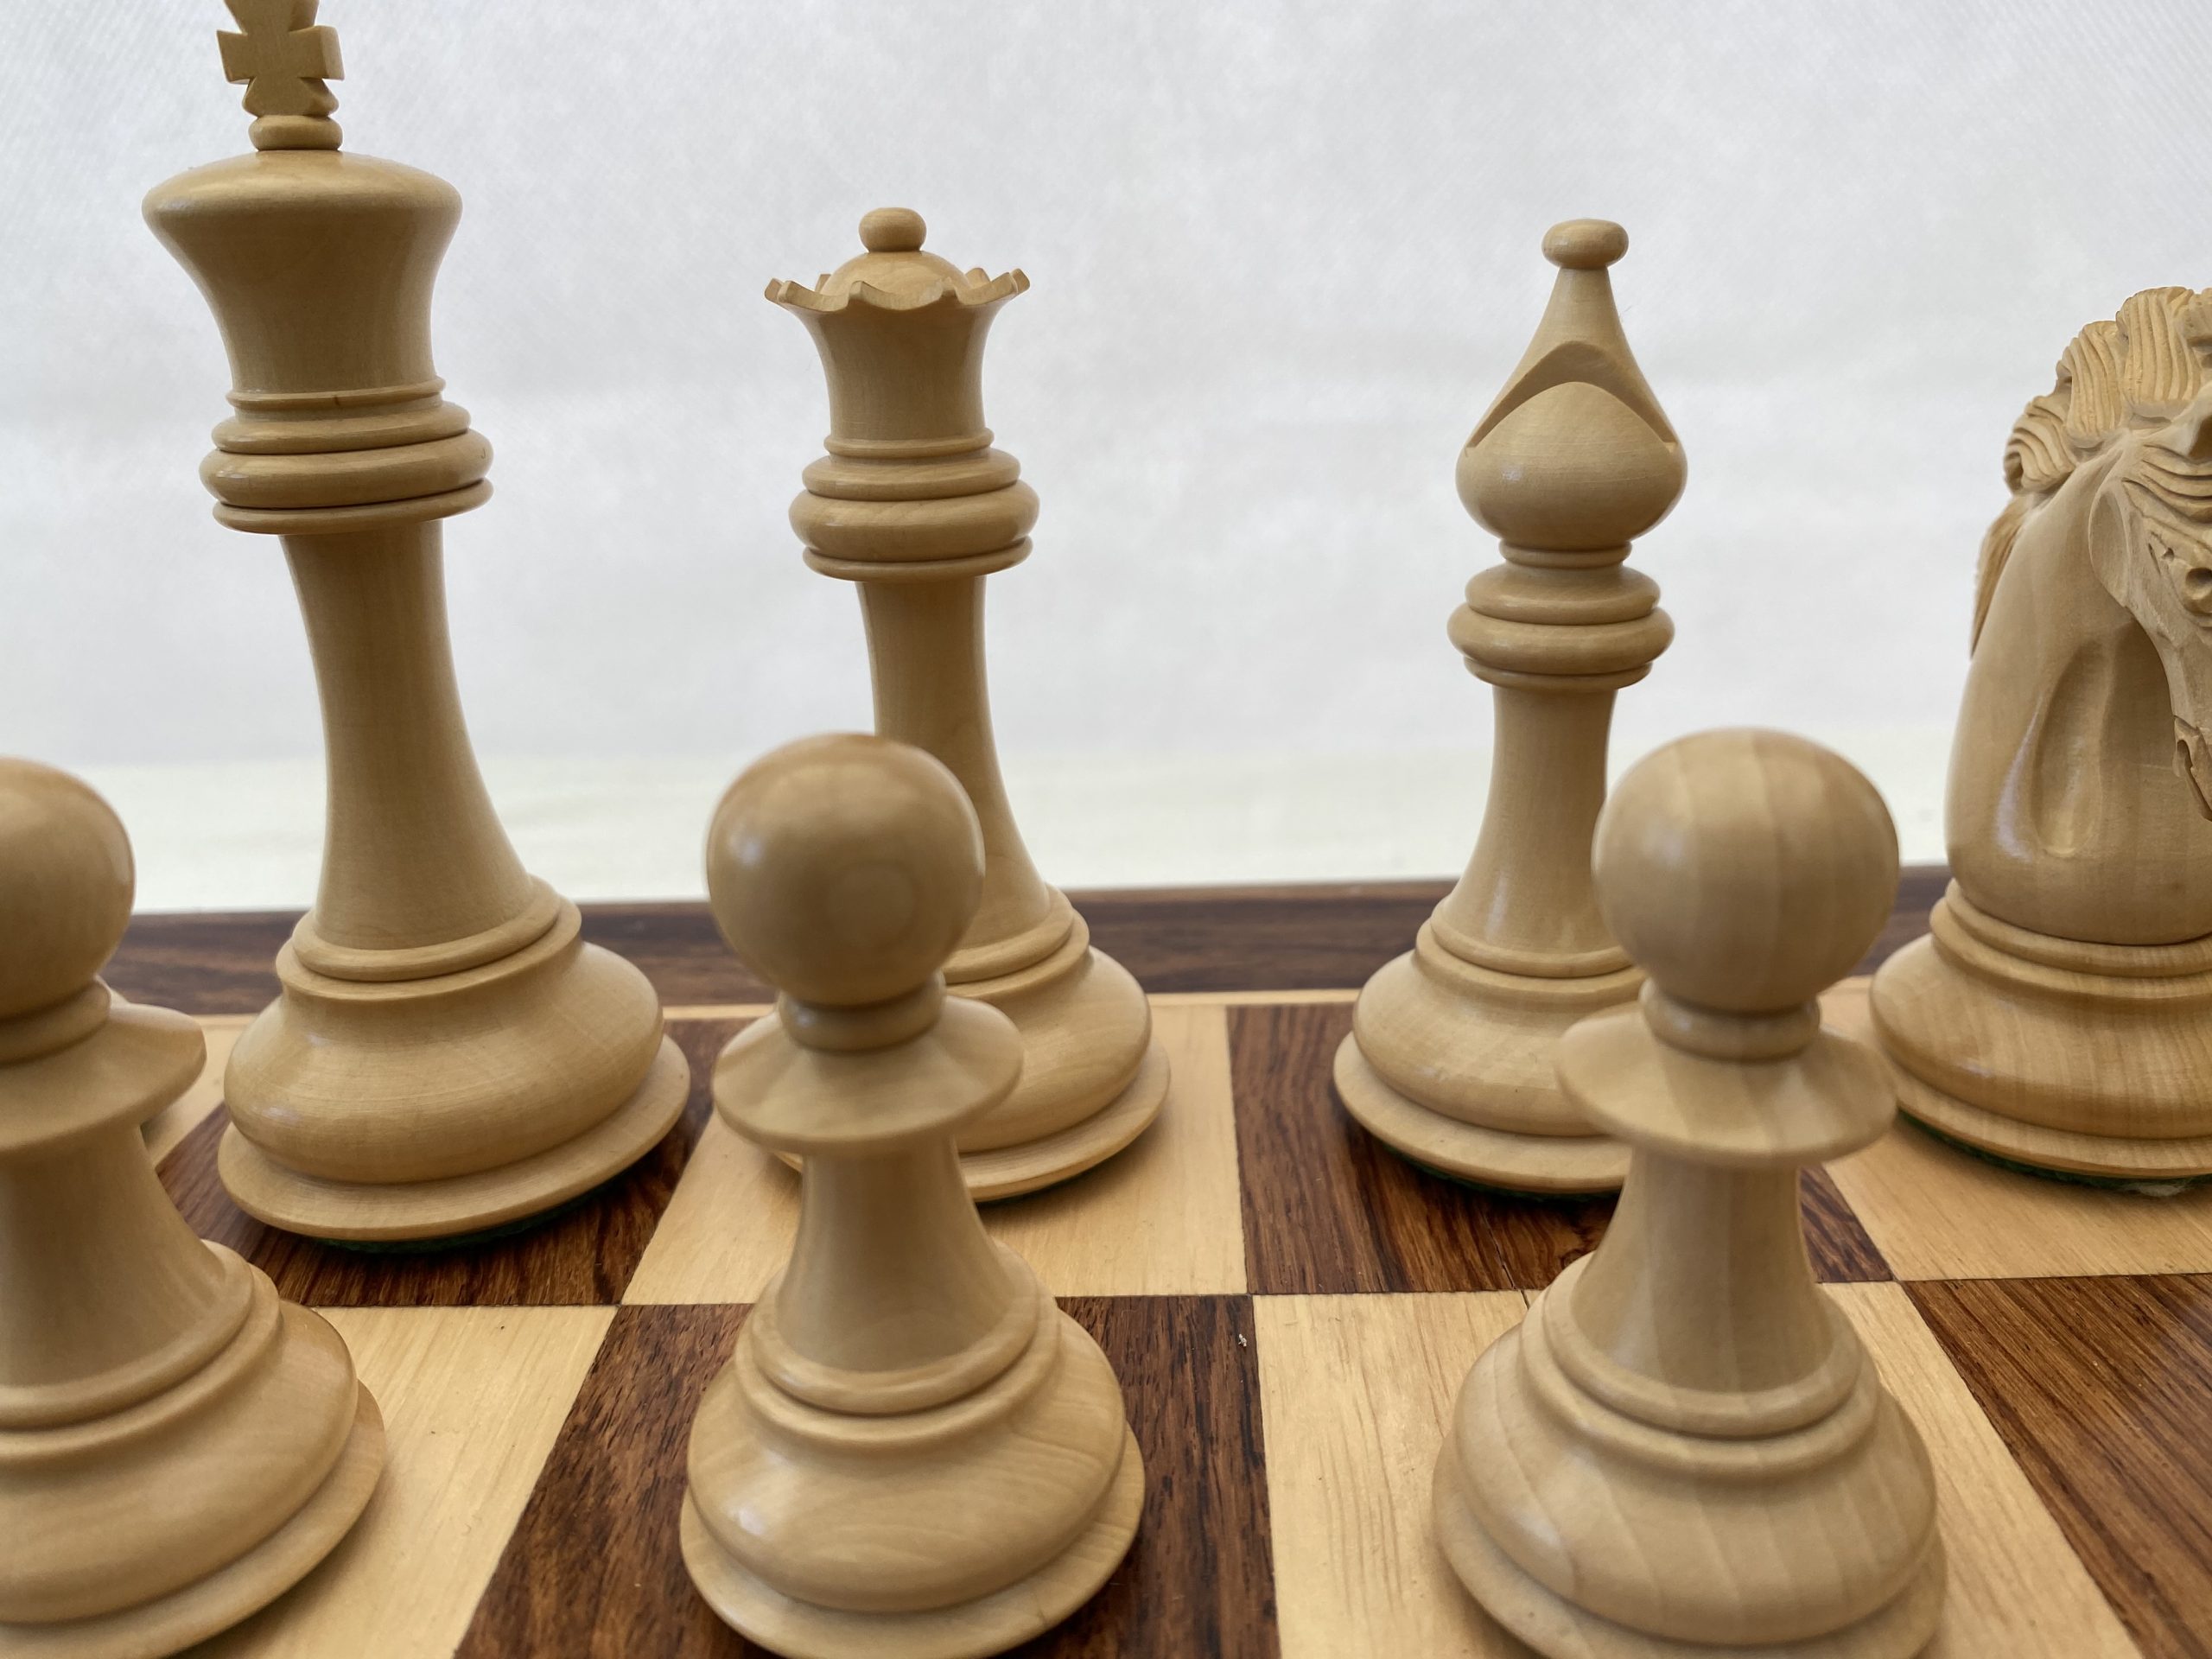 Tornearia - Peão de Xadrez / Woodturning - Chess Pawn 